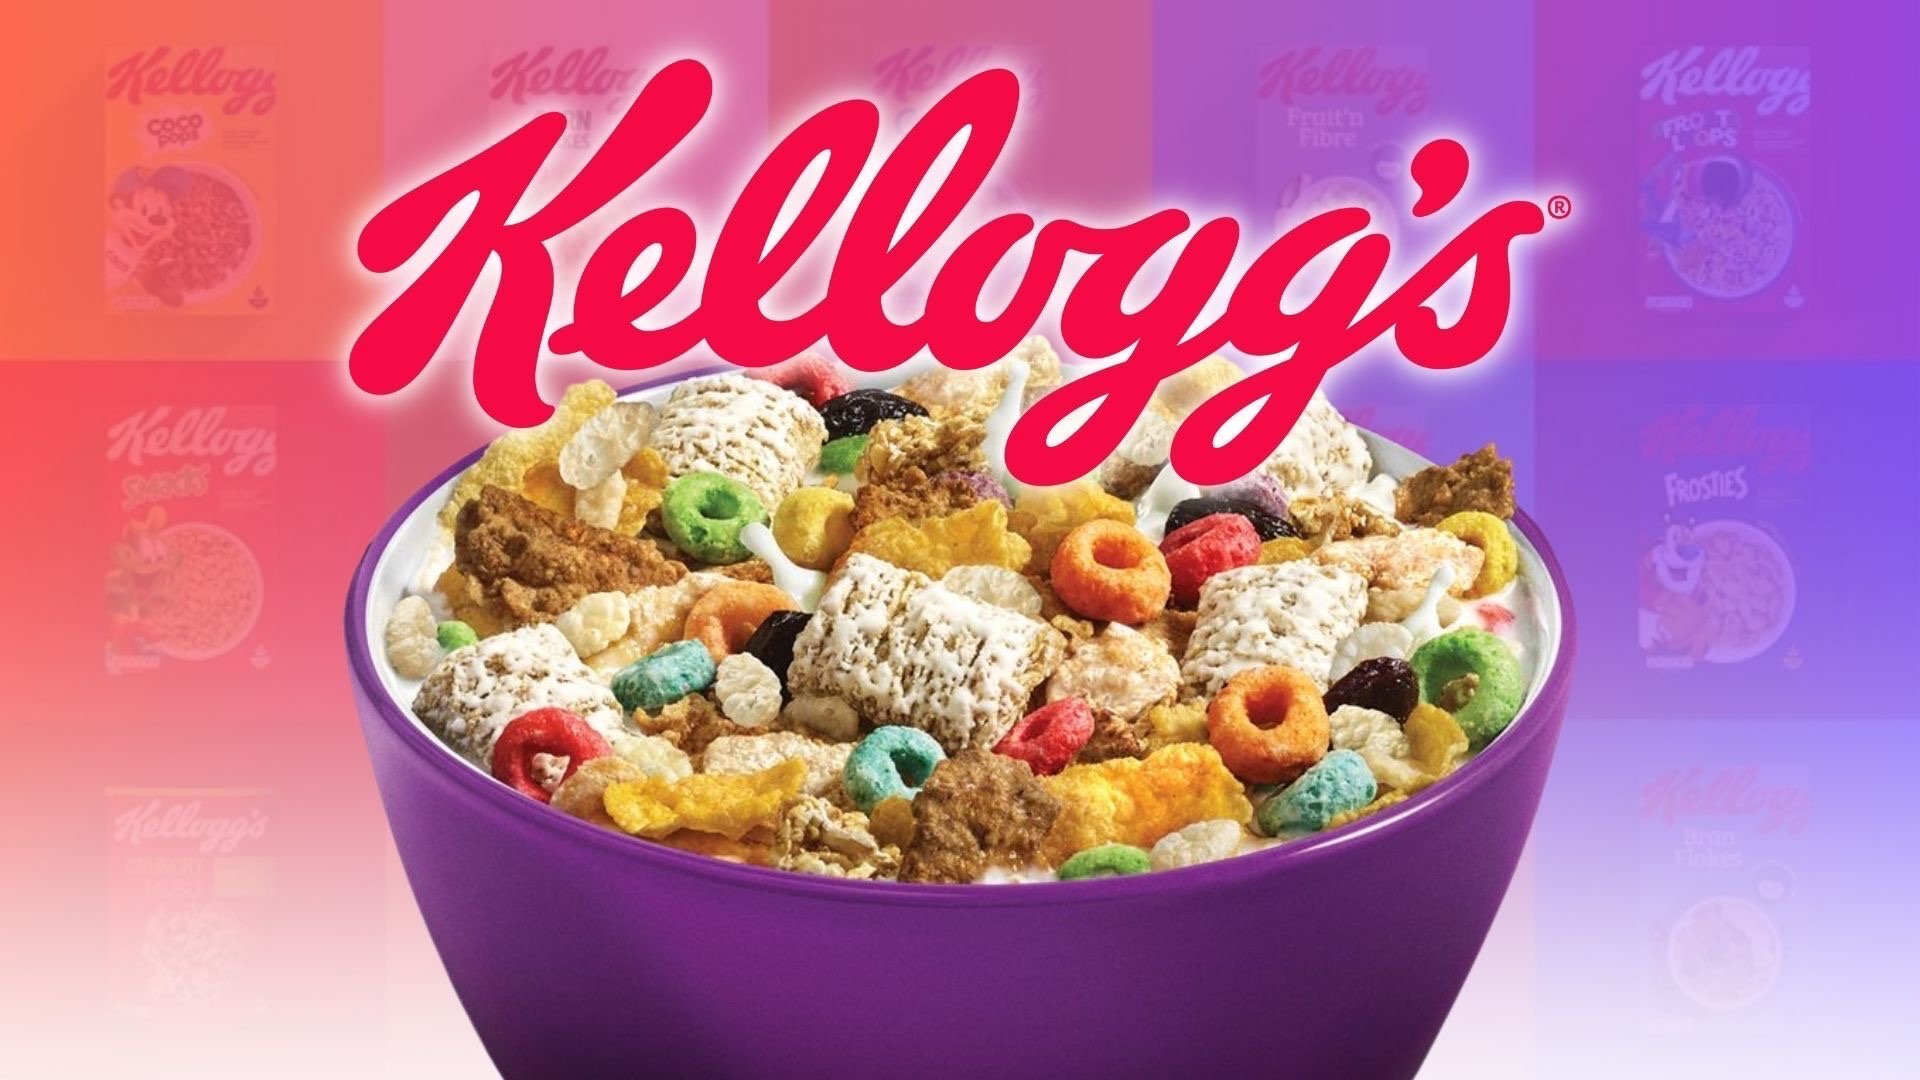 Kellogg’s Cereal Brands Go Digital: NFT Plans in the Works?